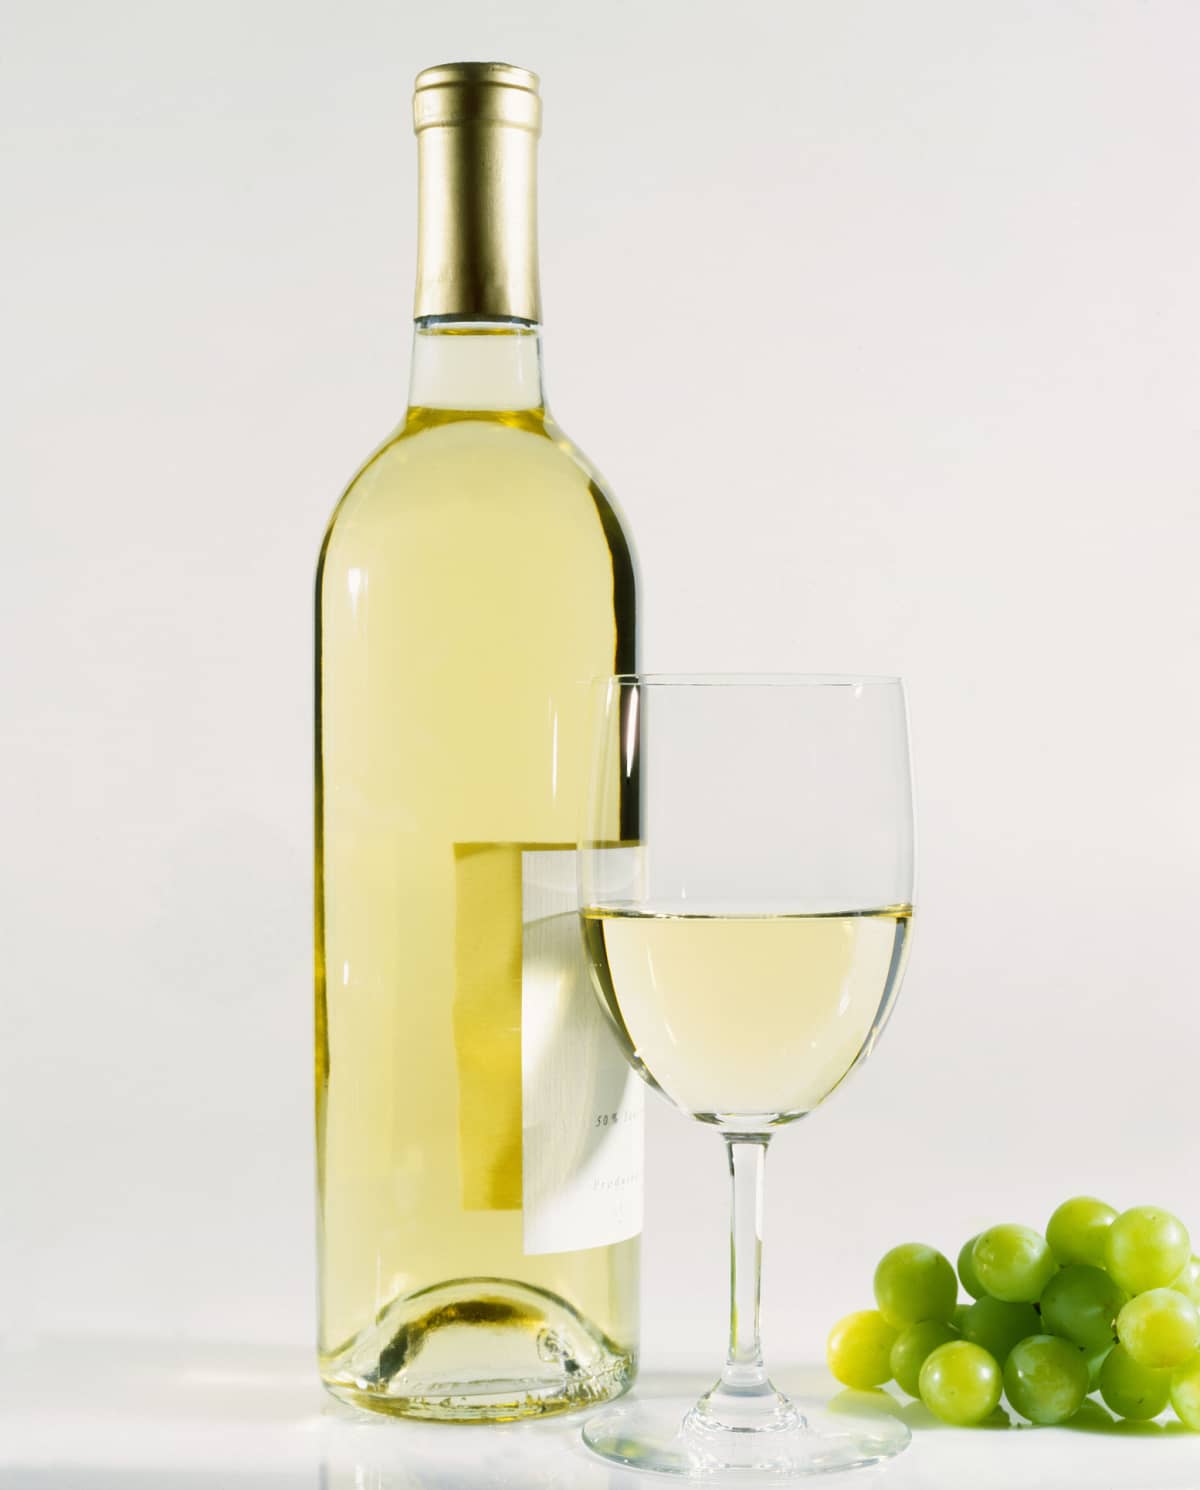 Wine bottle and wine glass on white backround